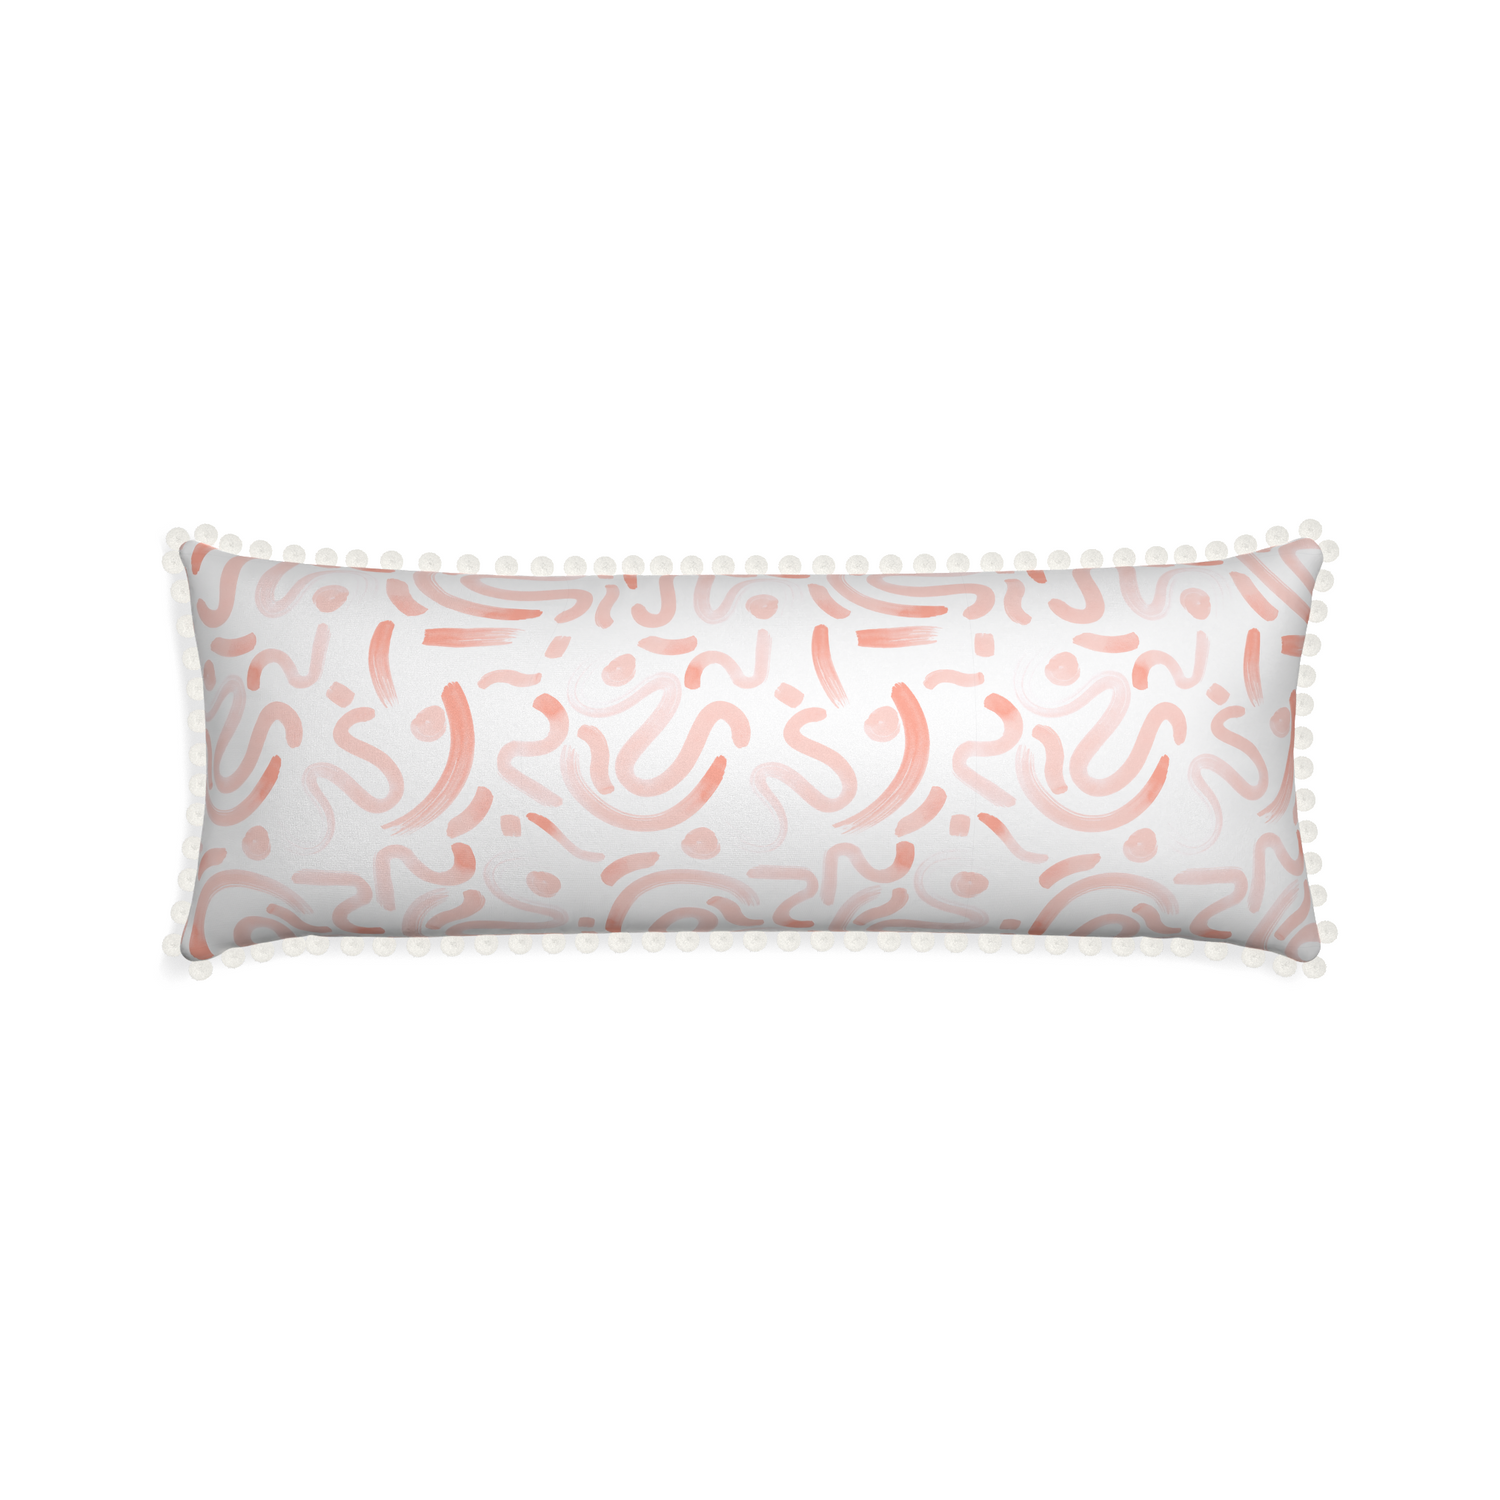 Xl-lumbar hockney pink custom pillow with snow pom pom on white background